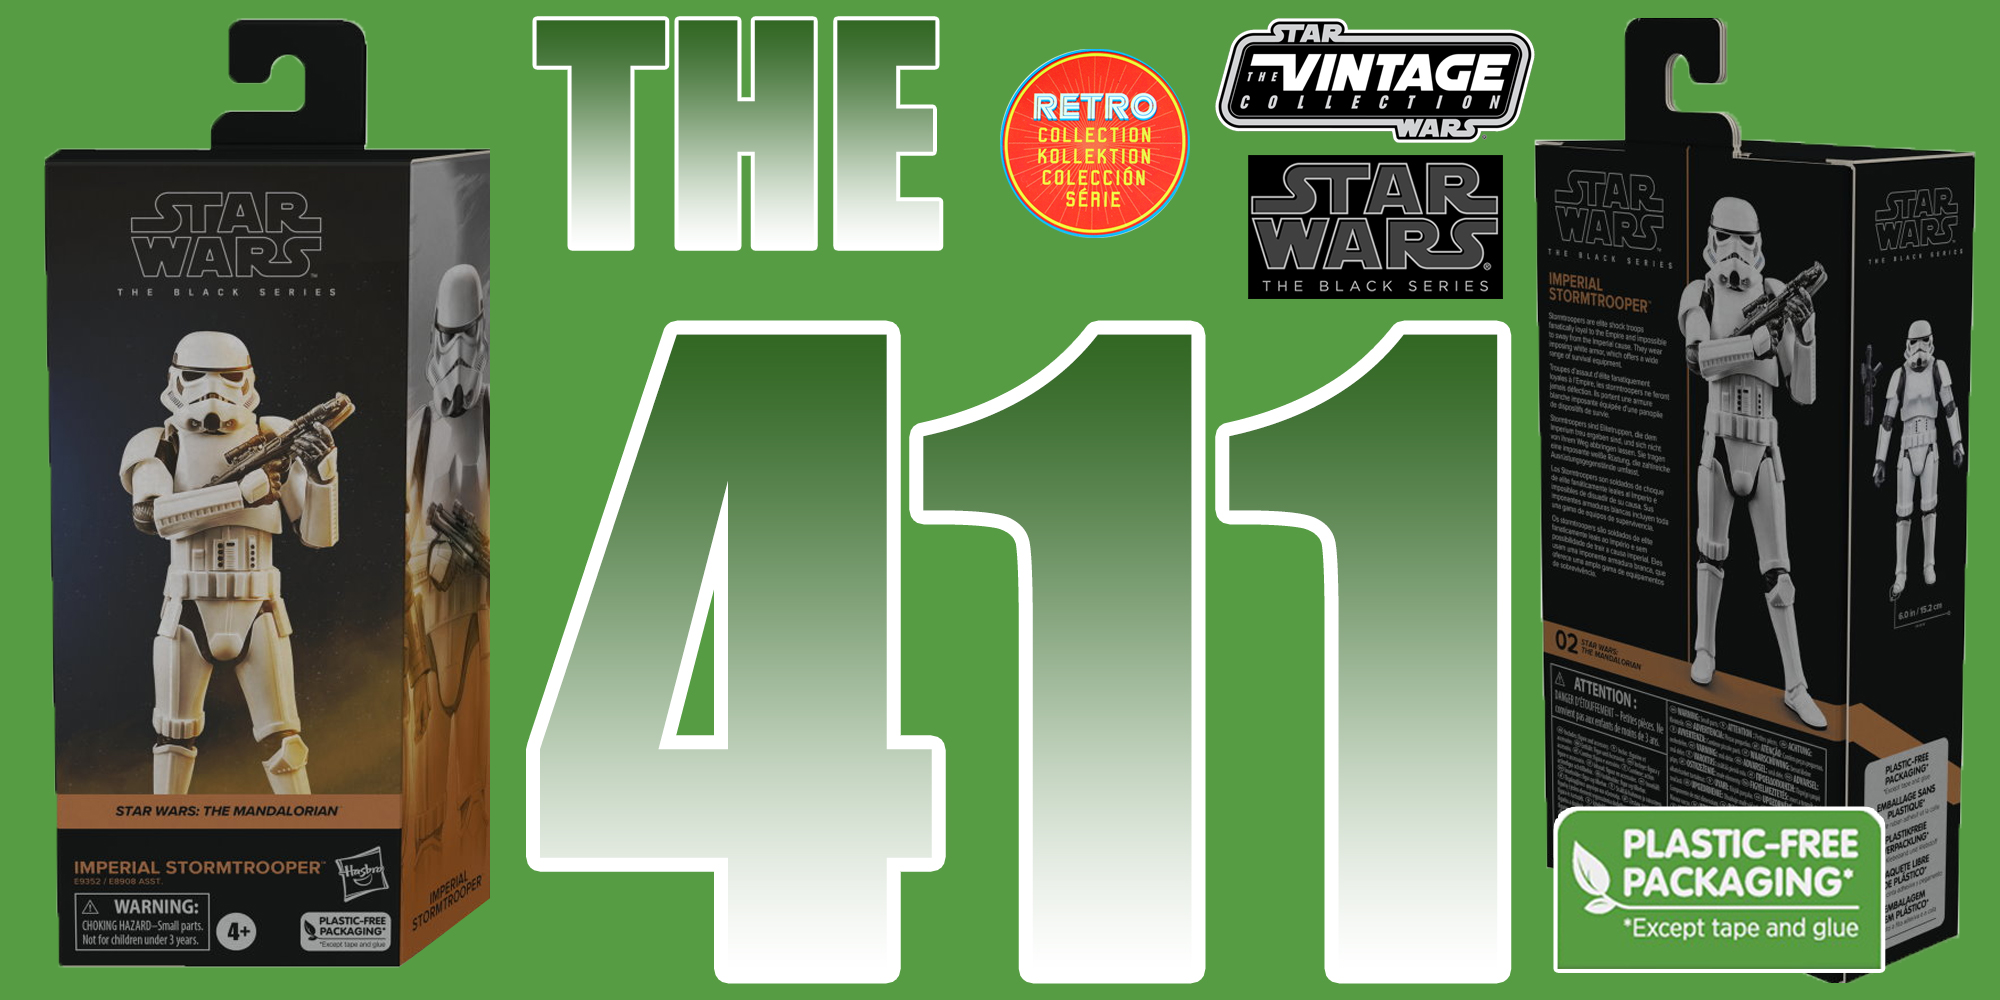 1983 Star Wars vintage spanish ROTJ sticker card big size Promo VIP Emperor 